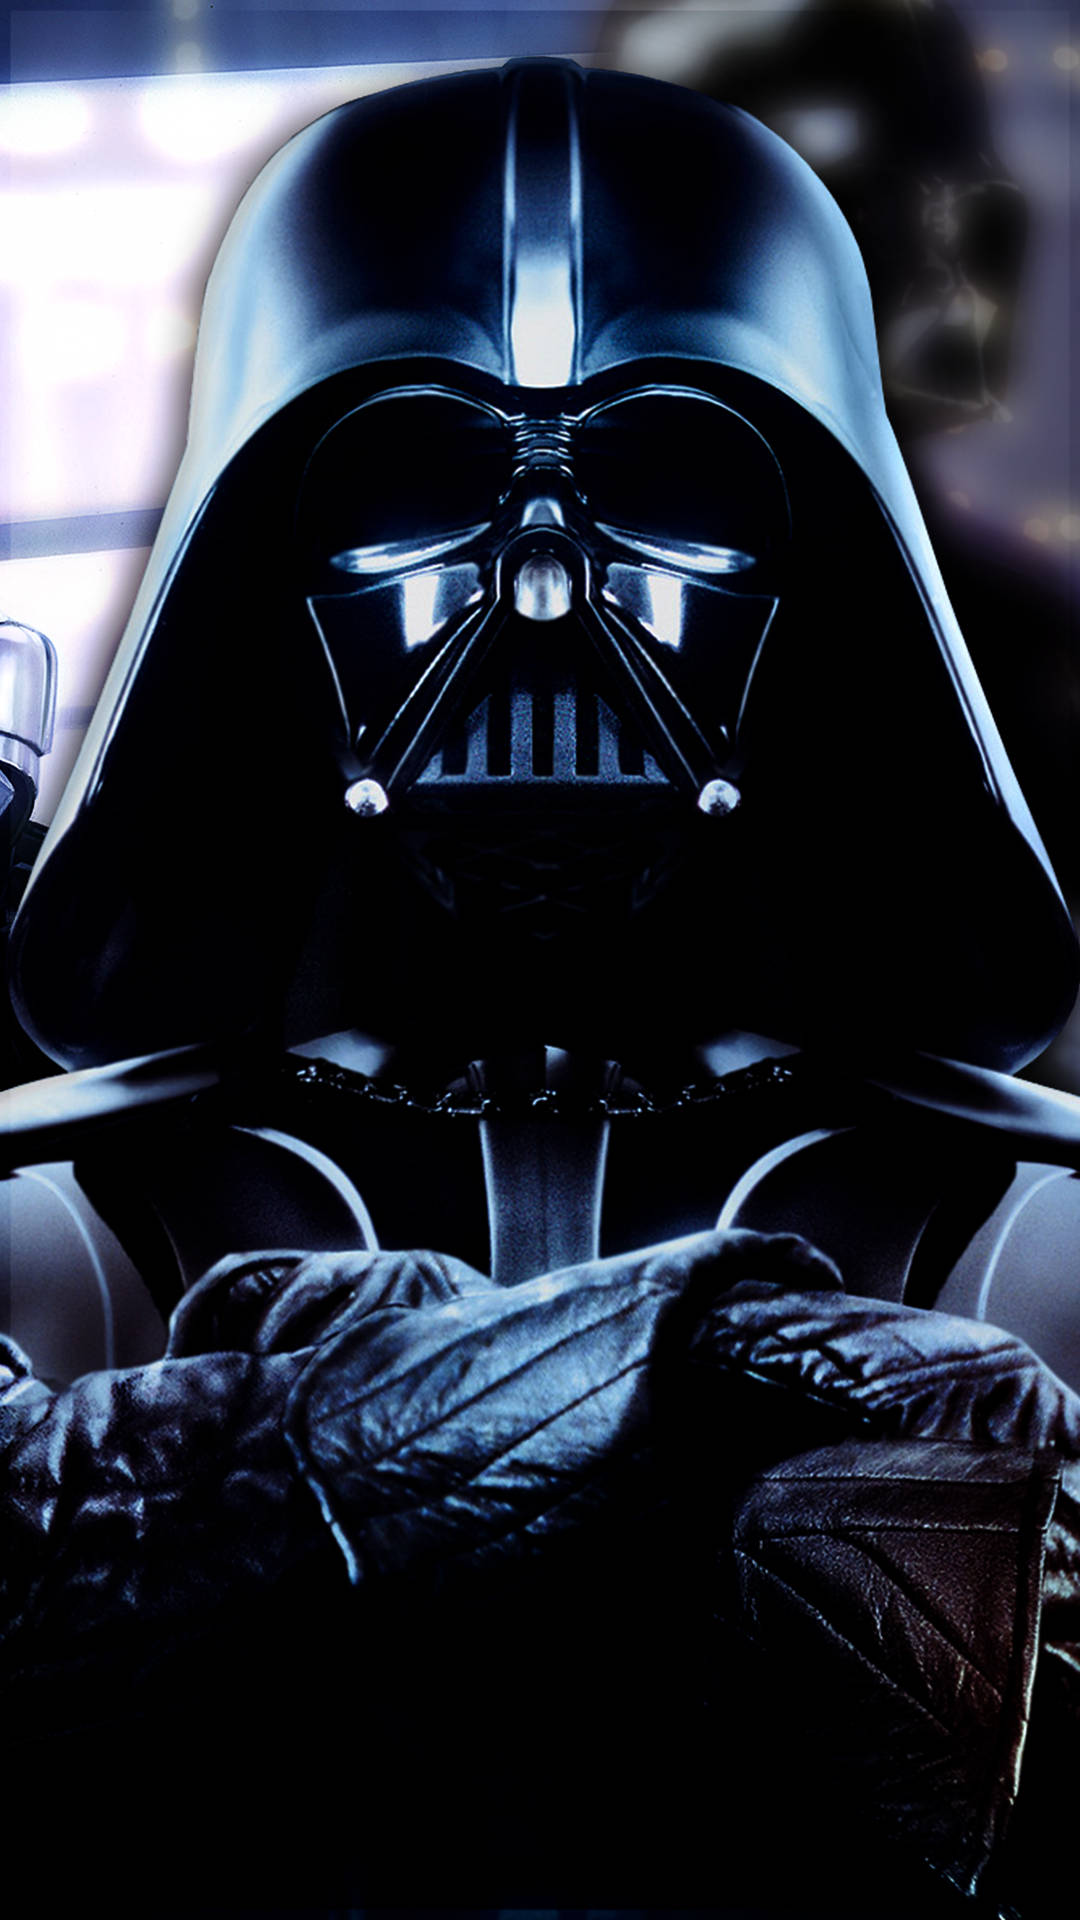 Darth Vader Arms Crossed Background